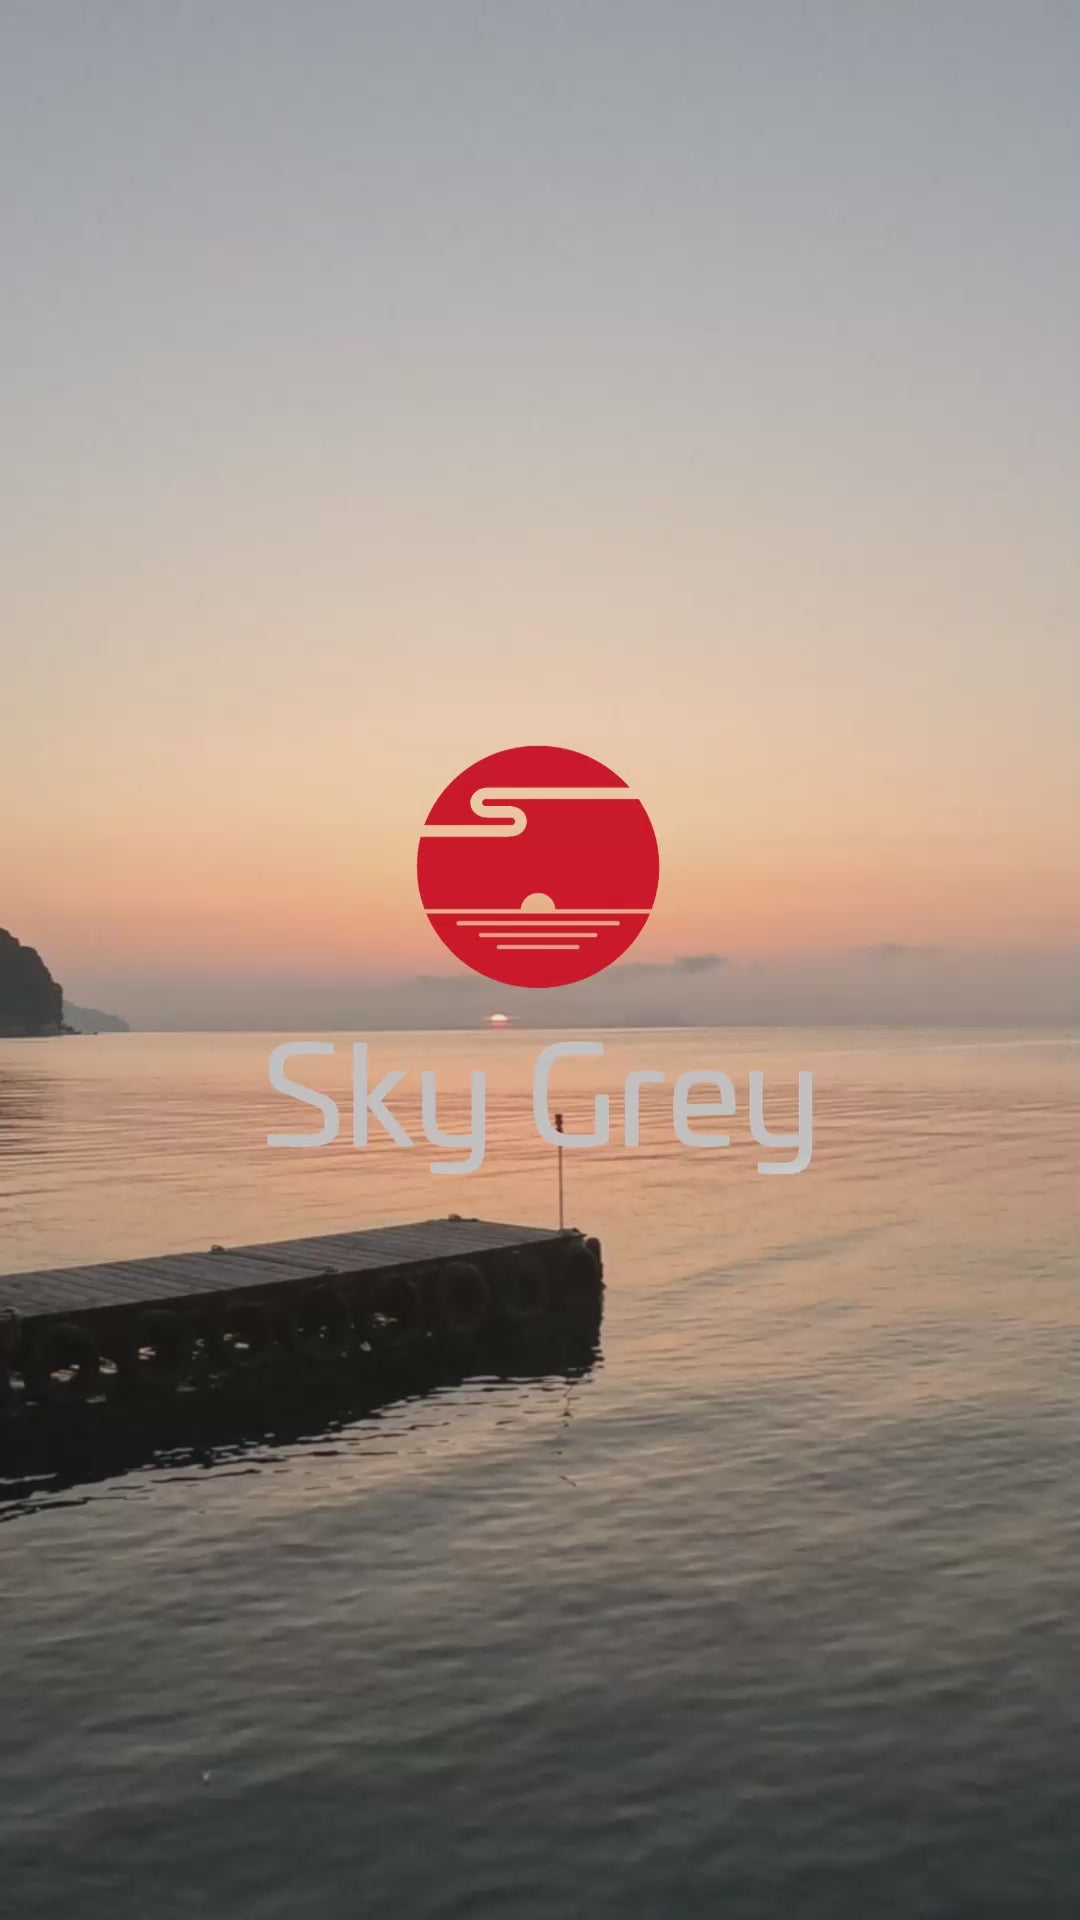 SkyGrey | スカイグレイ – SkyGreyLures